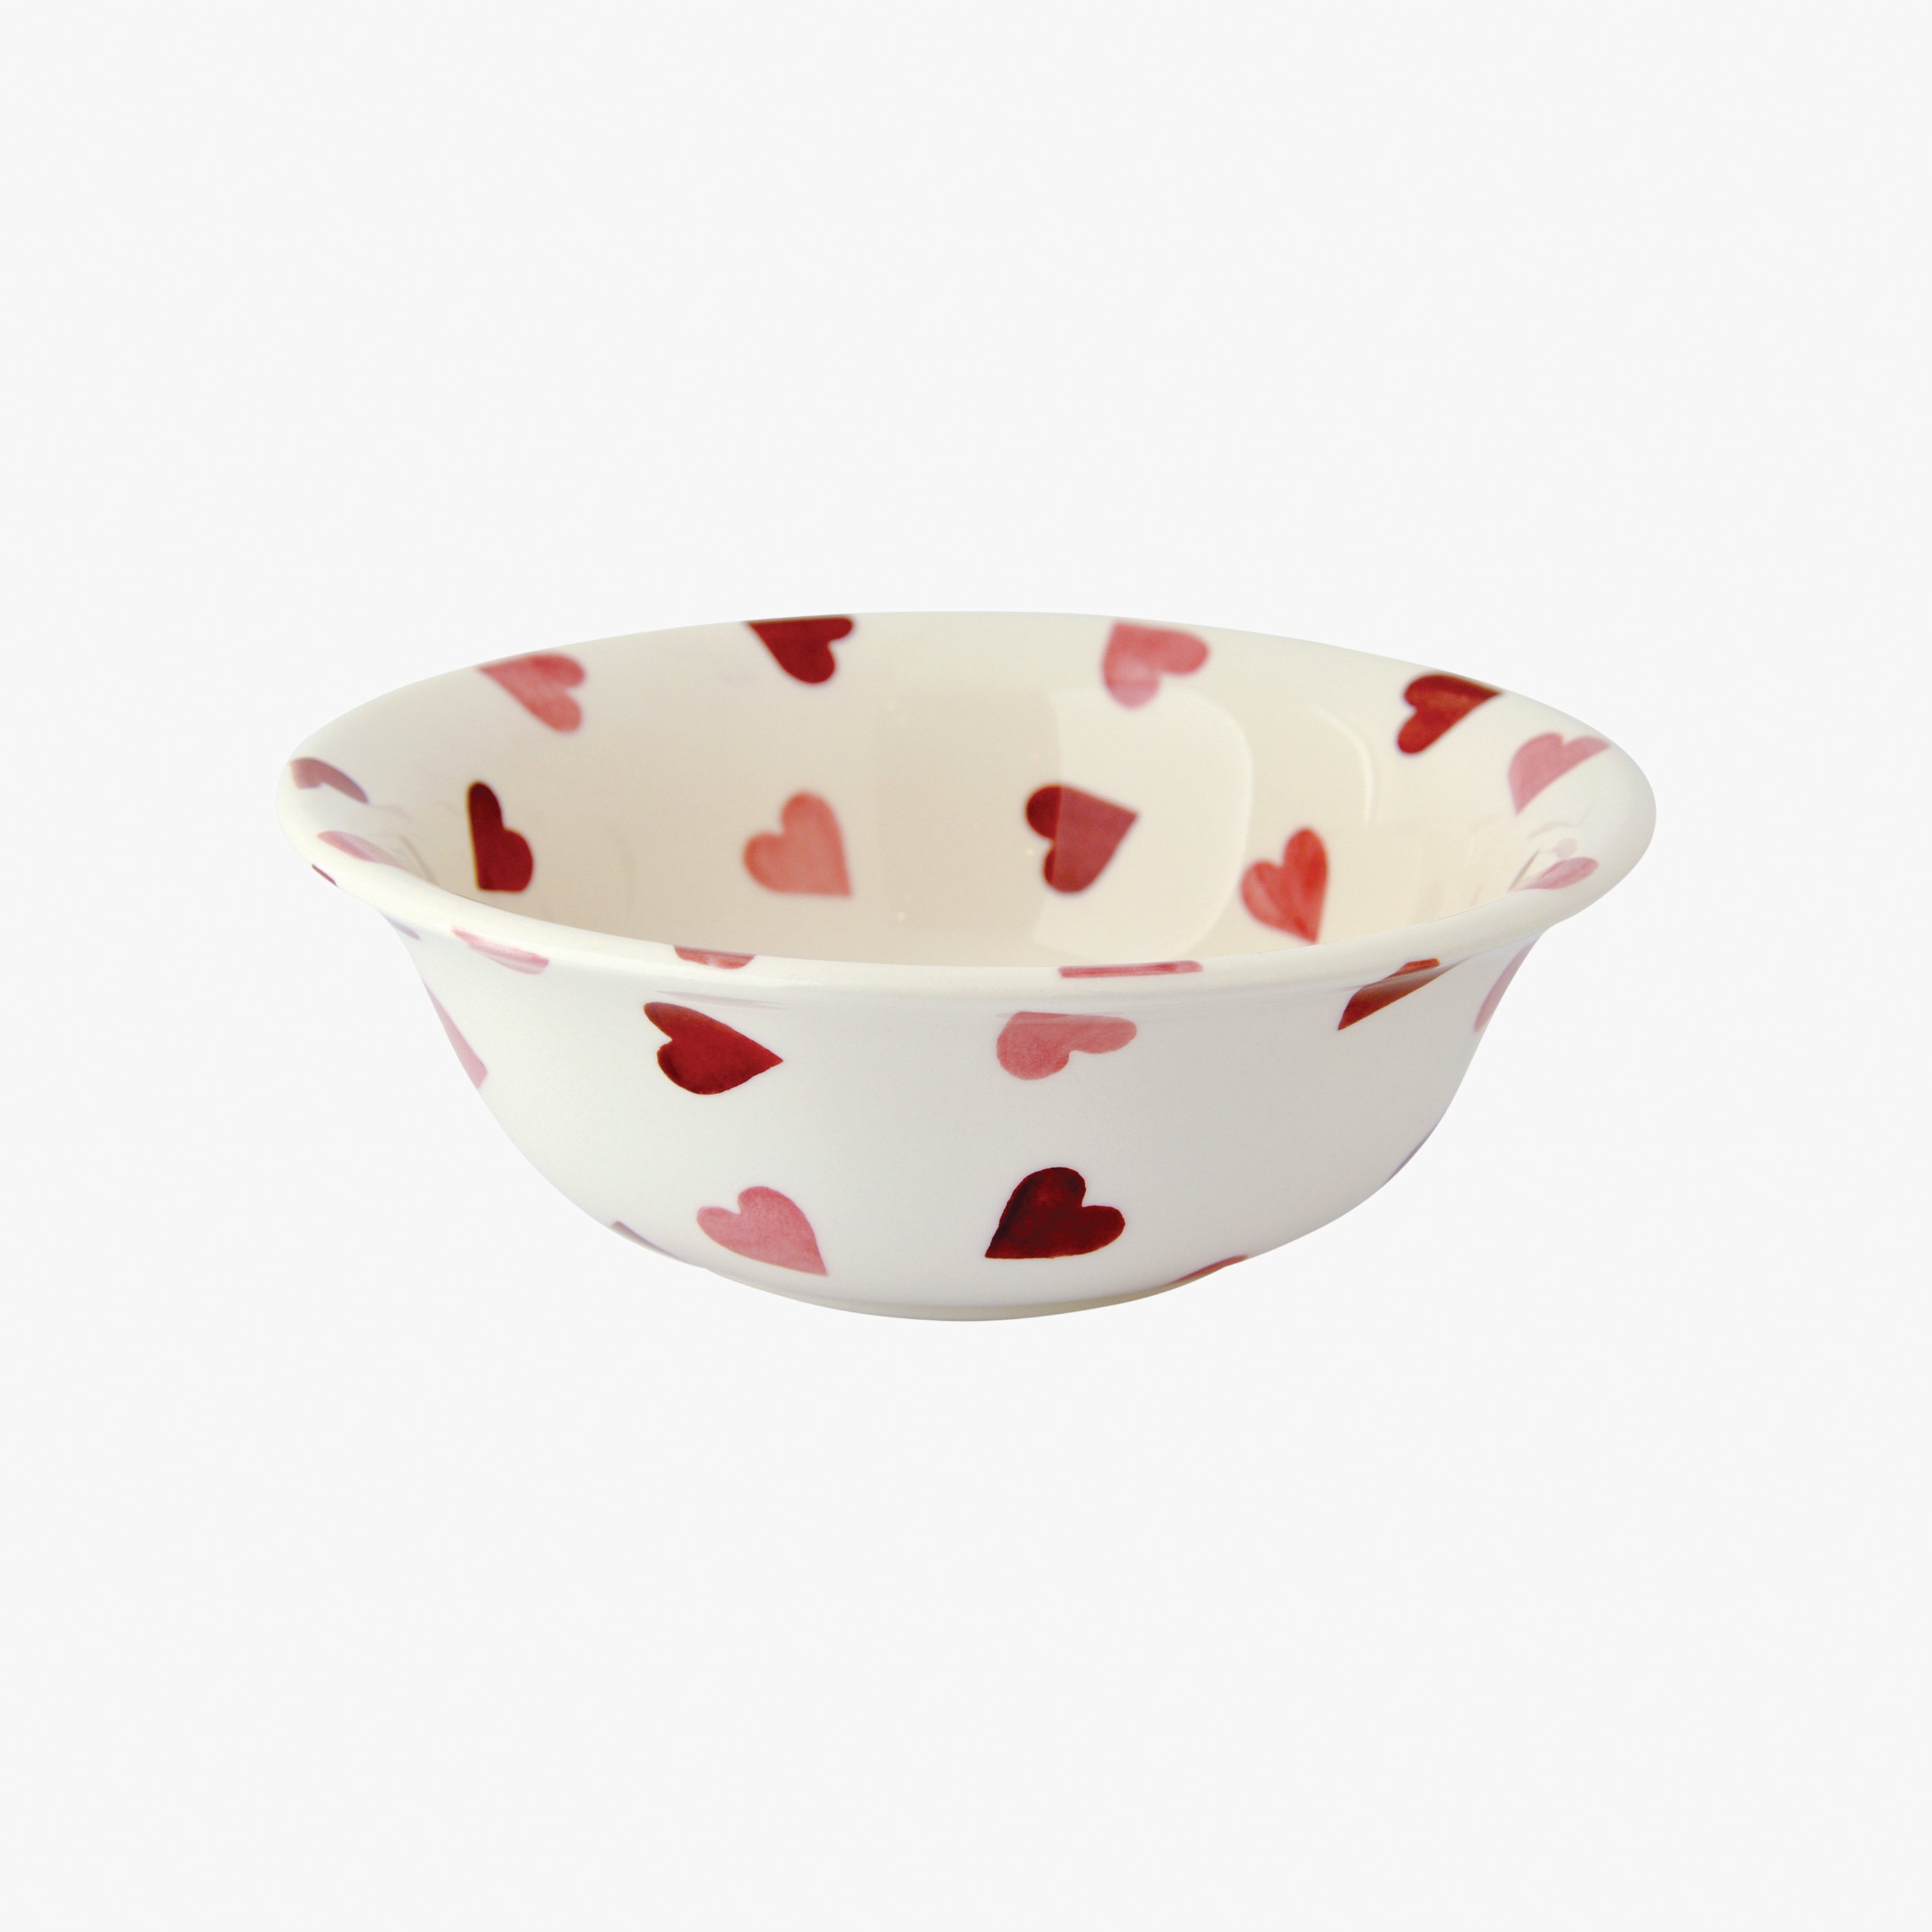 Emma Bridgewater  Pink Hearts Cereal Bowl - Unique Handmade & Handpainted English Earthenware Decora